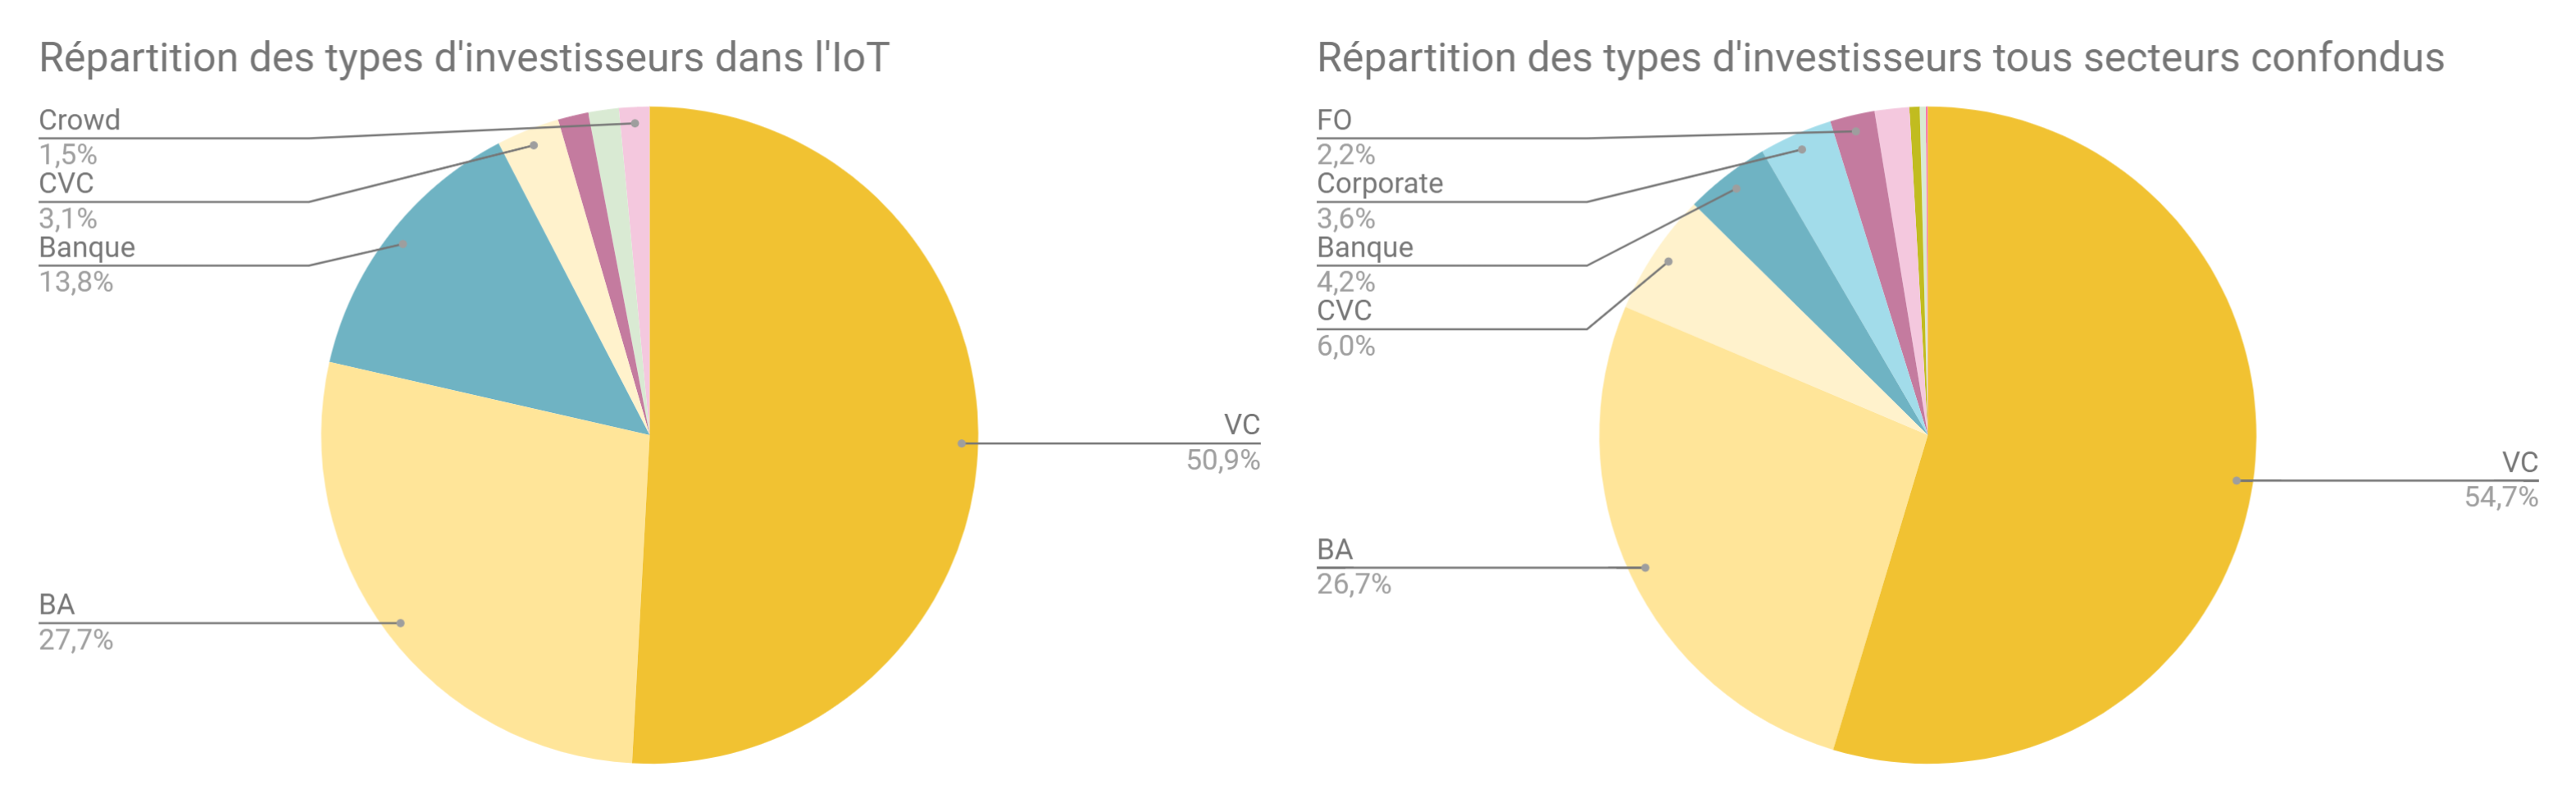 repartition_des_types_dinvestisseurs_1.png